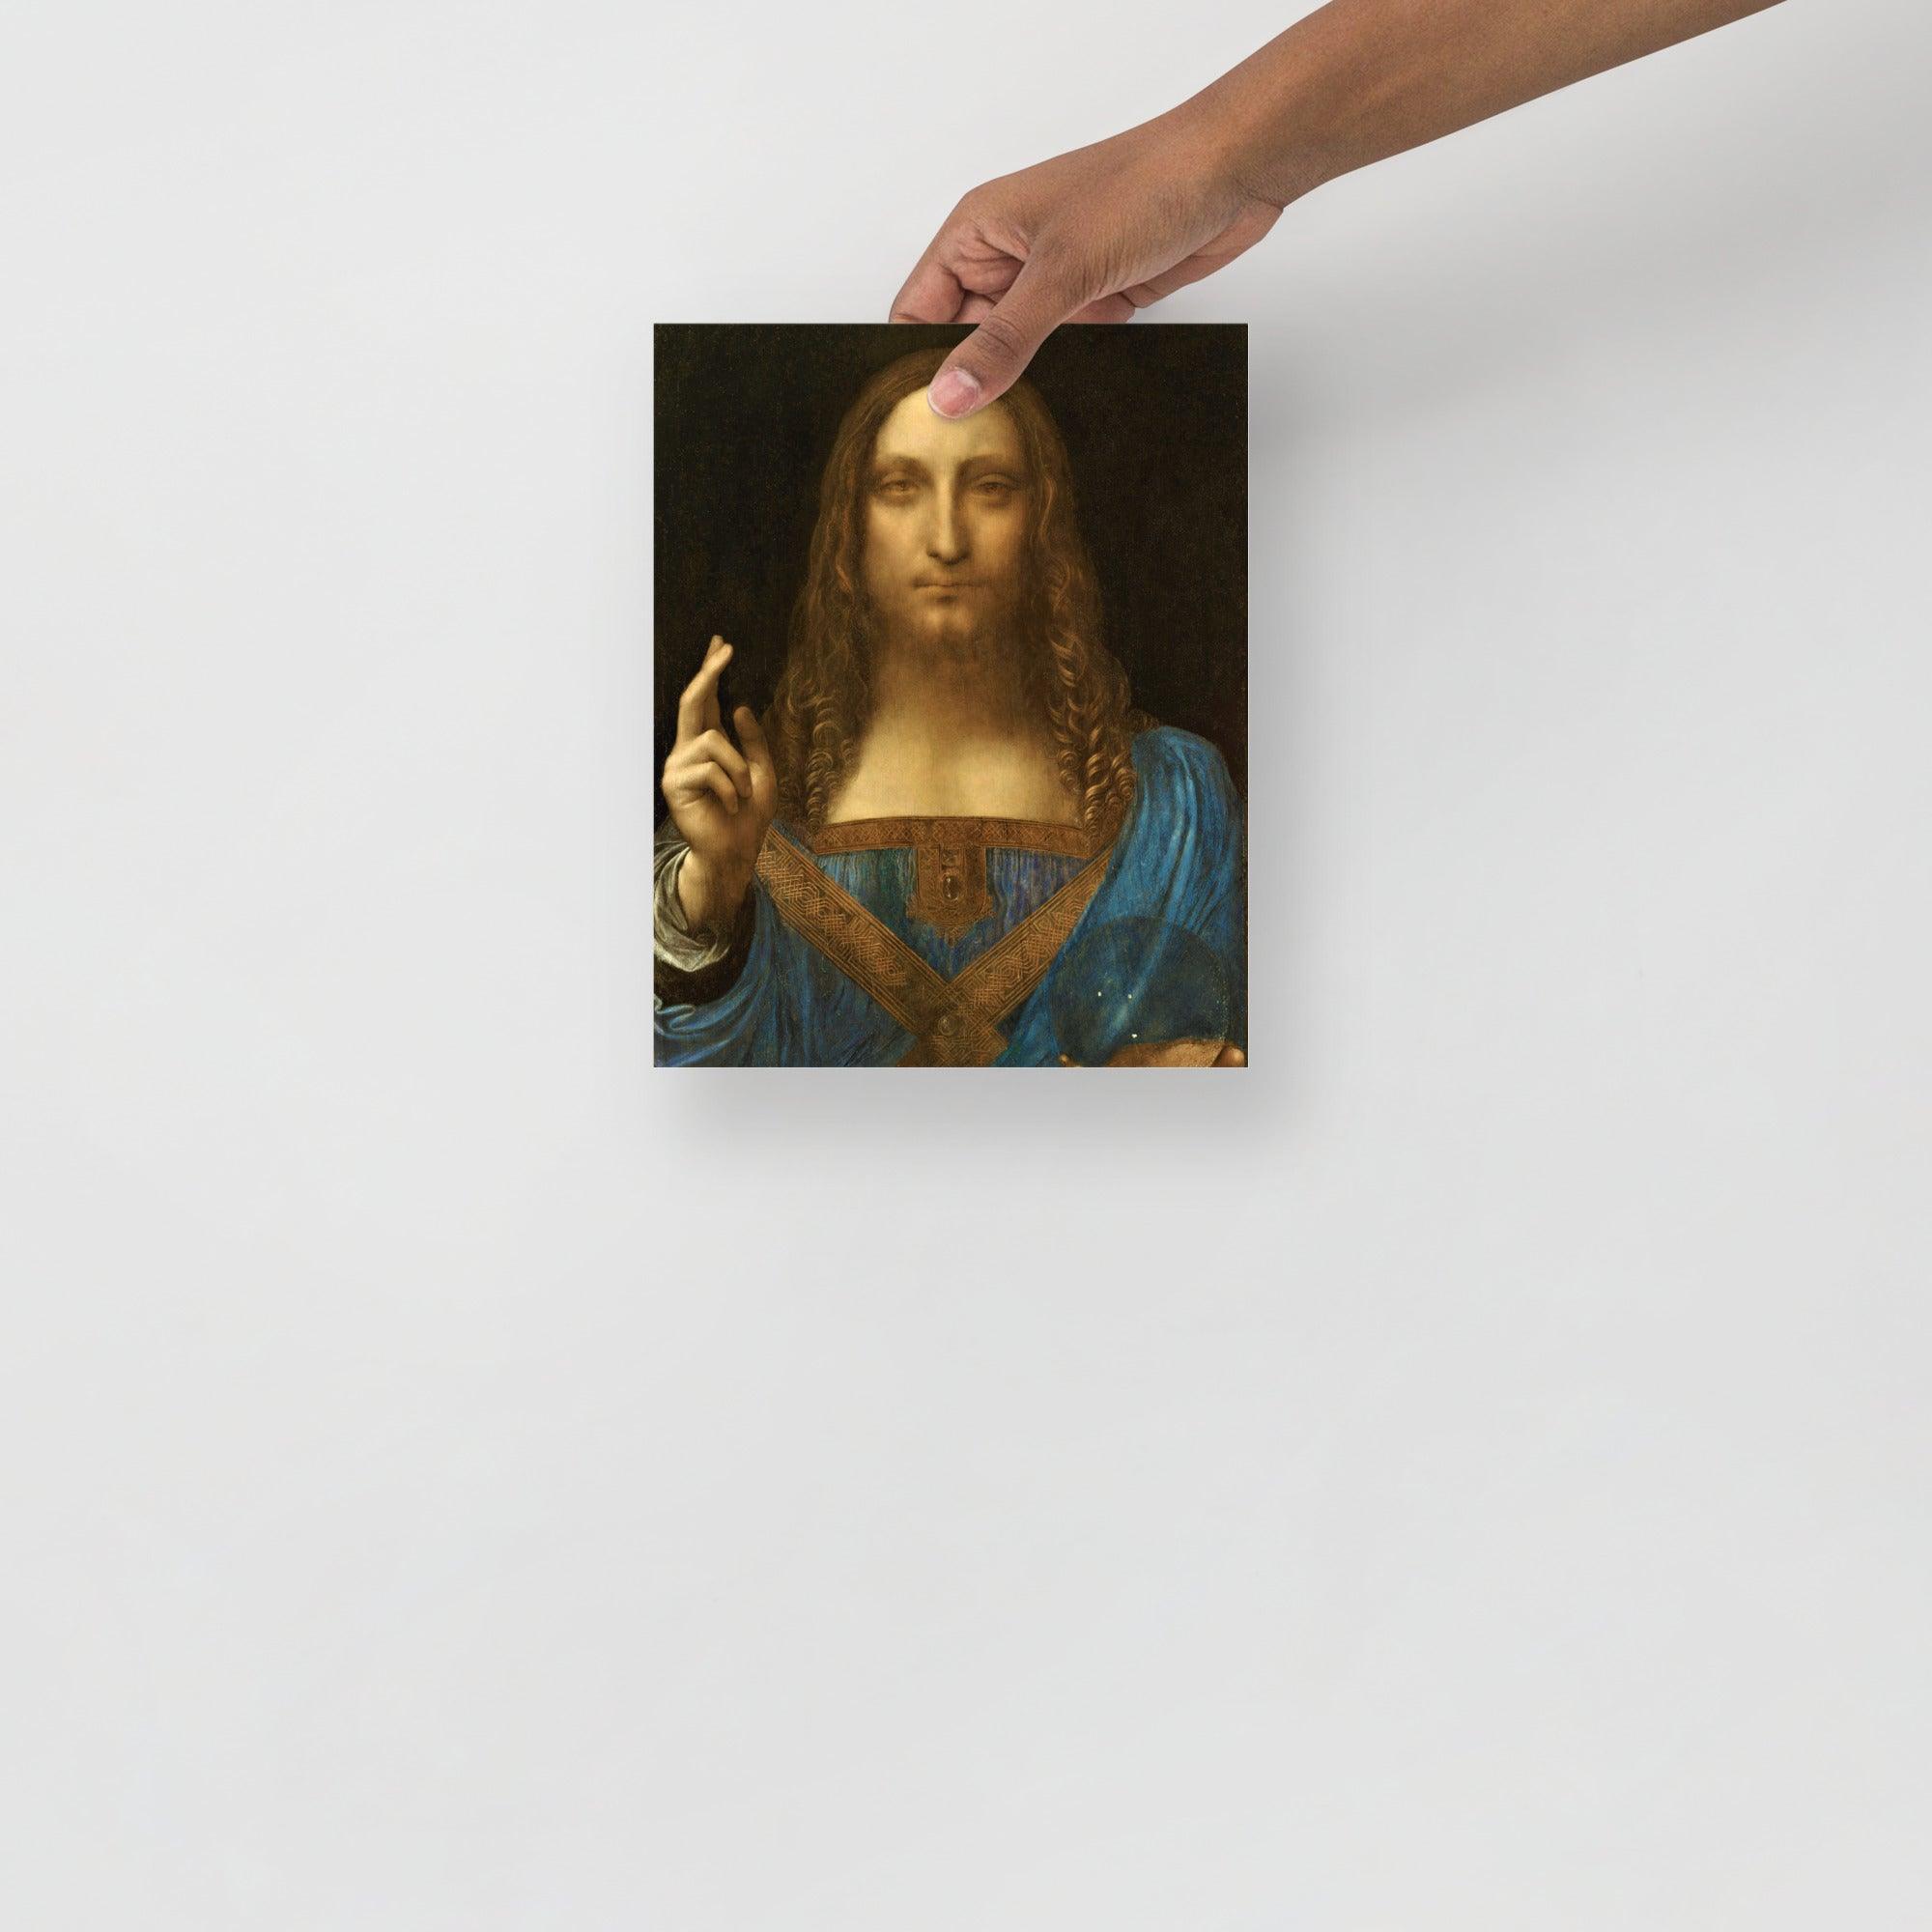 A Salvator Mundi by Leonardo Da Vinci poster on a plain backdrop in size 8x10”.